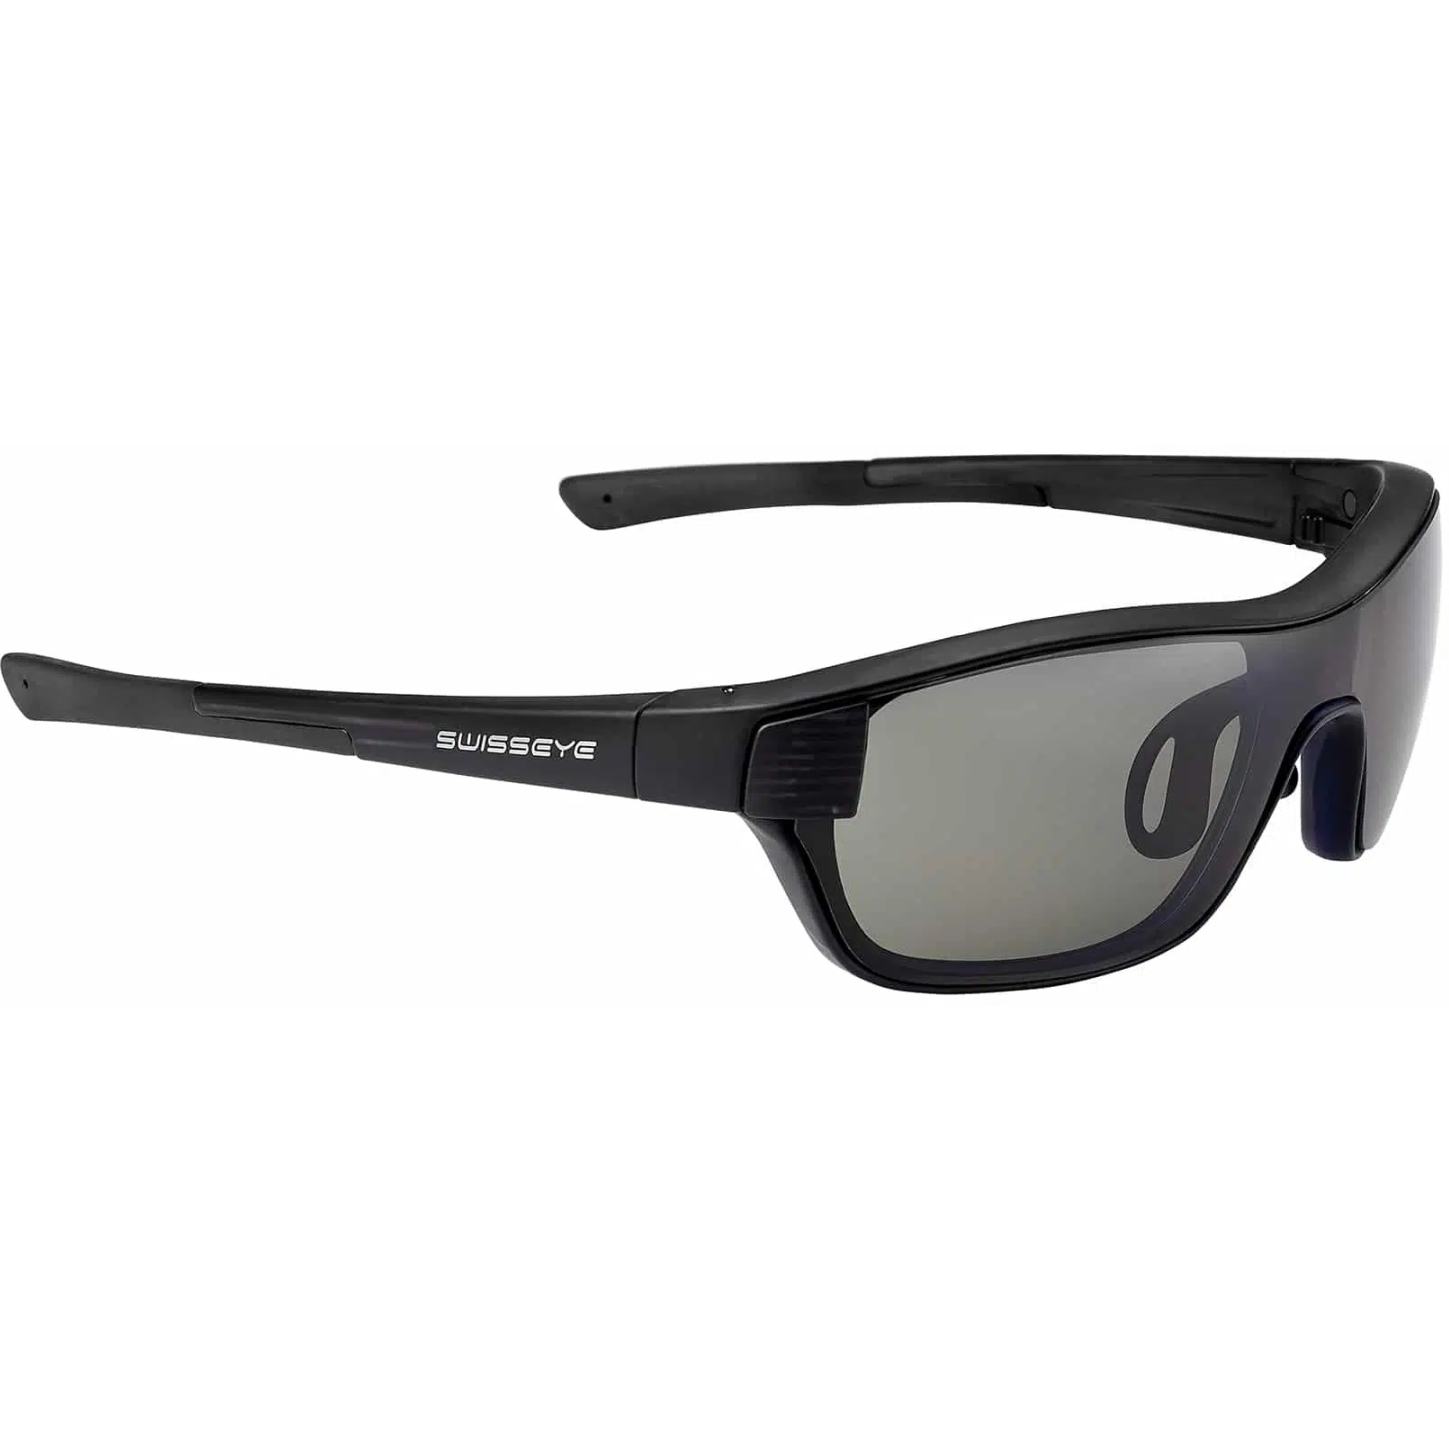 Productfoto van Swiss Eye M-Cover Glasses 12541 - Black Matt Striped - Smoke + Orange + Clear